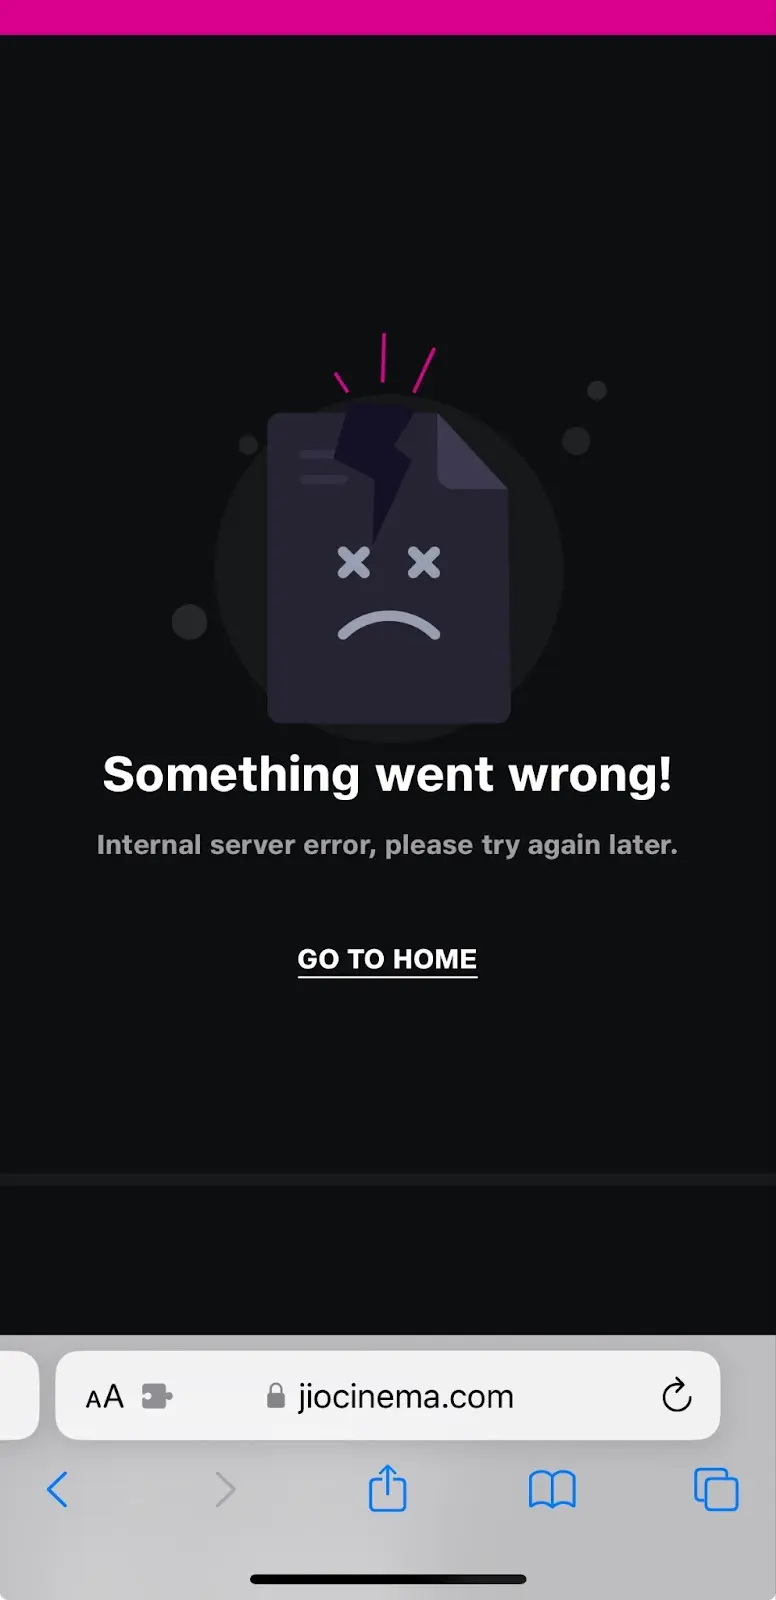 'Something went wrong' error message on JioCinema